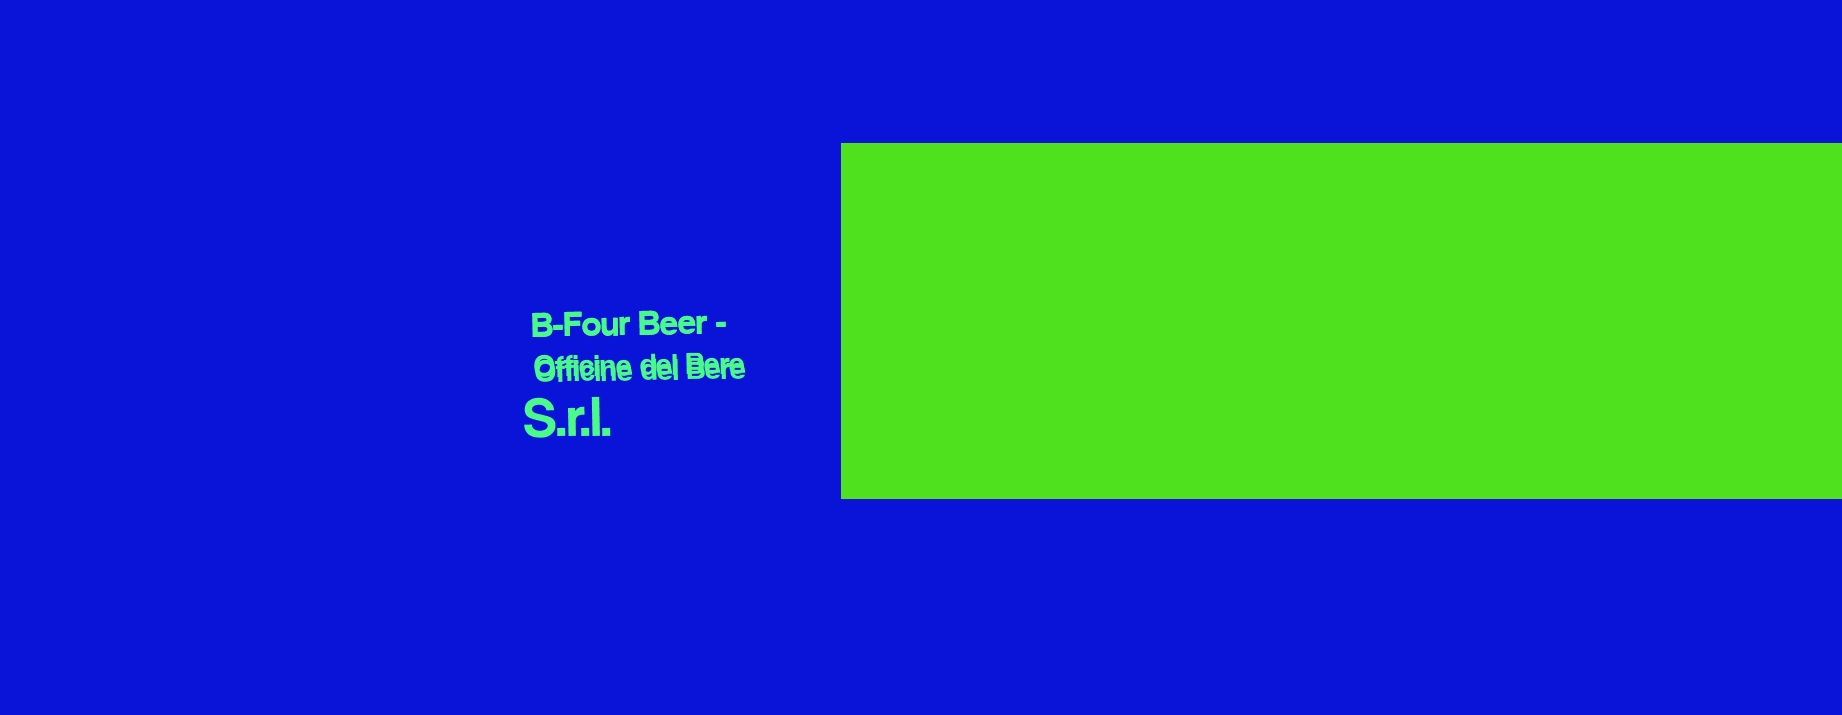 logo B-Four Beer - Officine del Bere S.r.l.